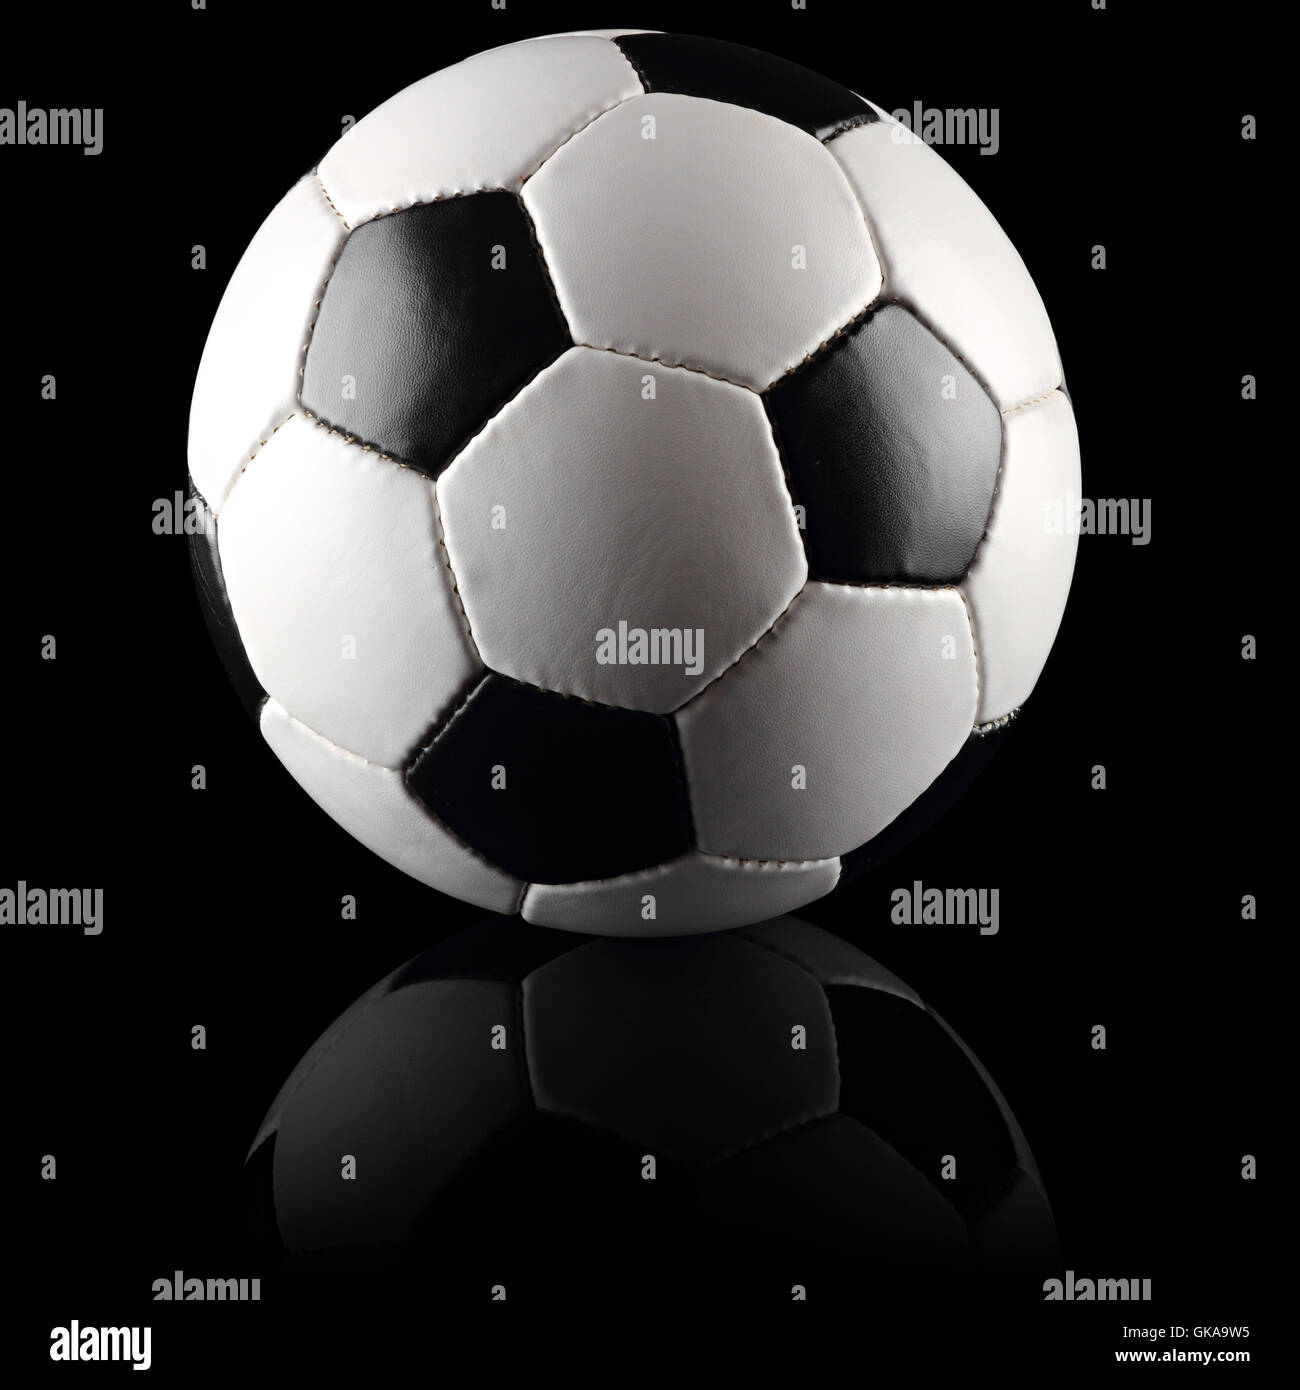 soccer ball 1 Stock Photo